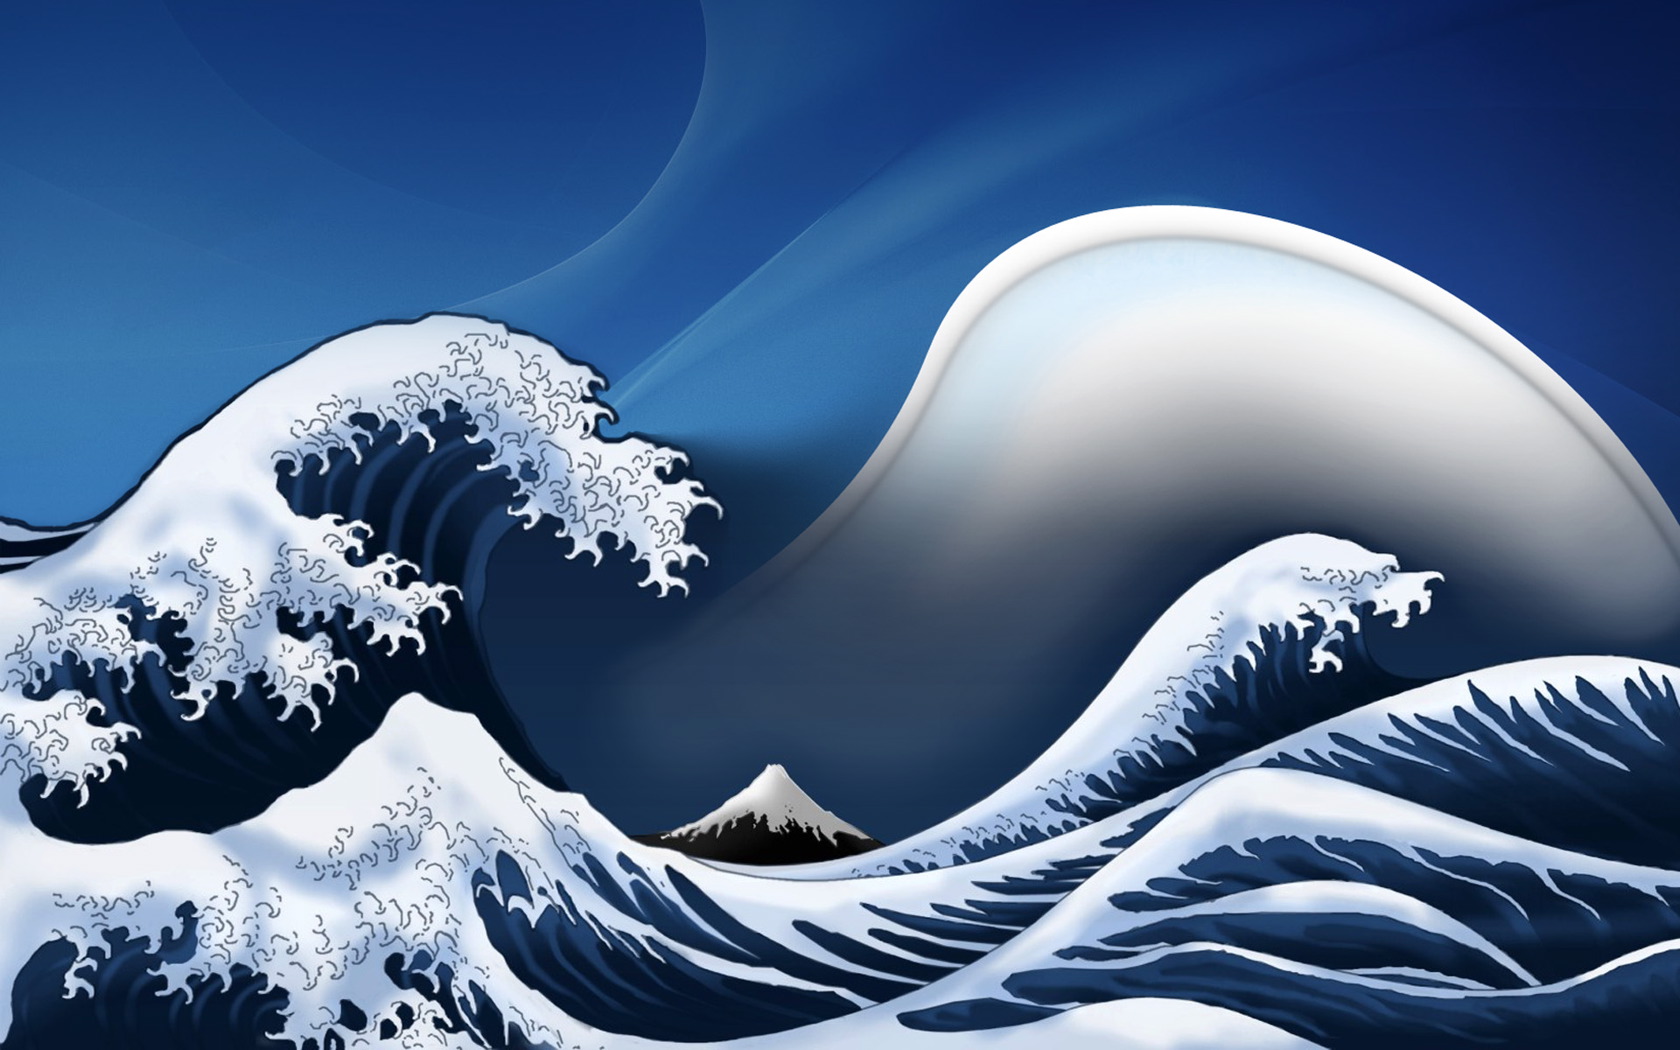 Ocean Waves | Ghibli Wiki | Fandom